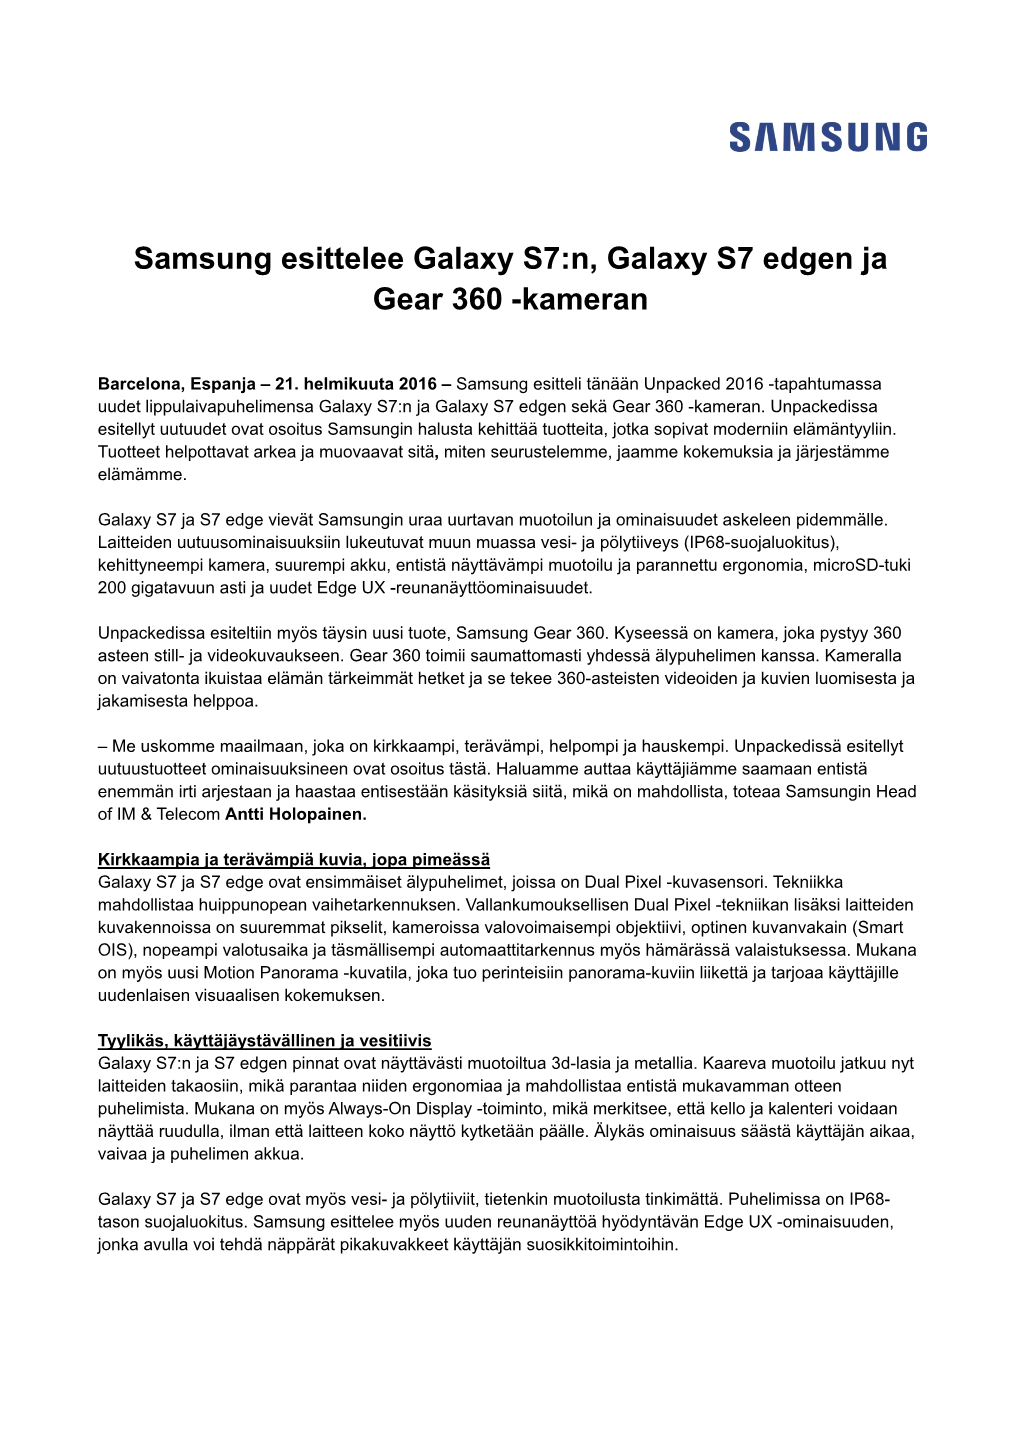 Samsung Esittelee Galaxy S7:N, Galaxy S7 Edgen Ja Gear 360 -Kameran